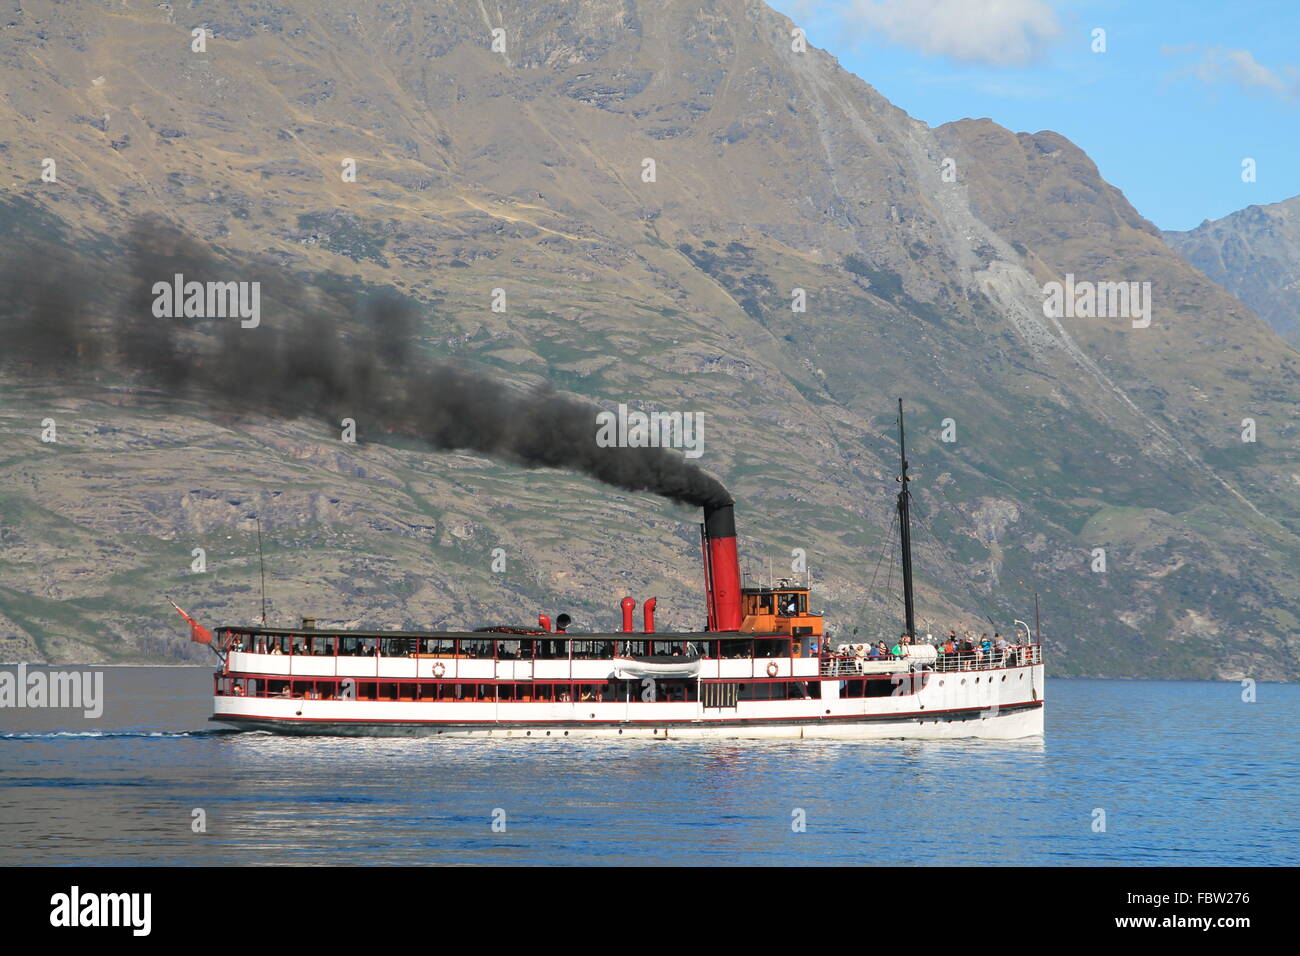 El vaporizador en el lago Wakatipu, Nueva Zelanda Foto de stock